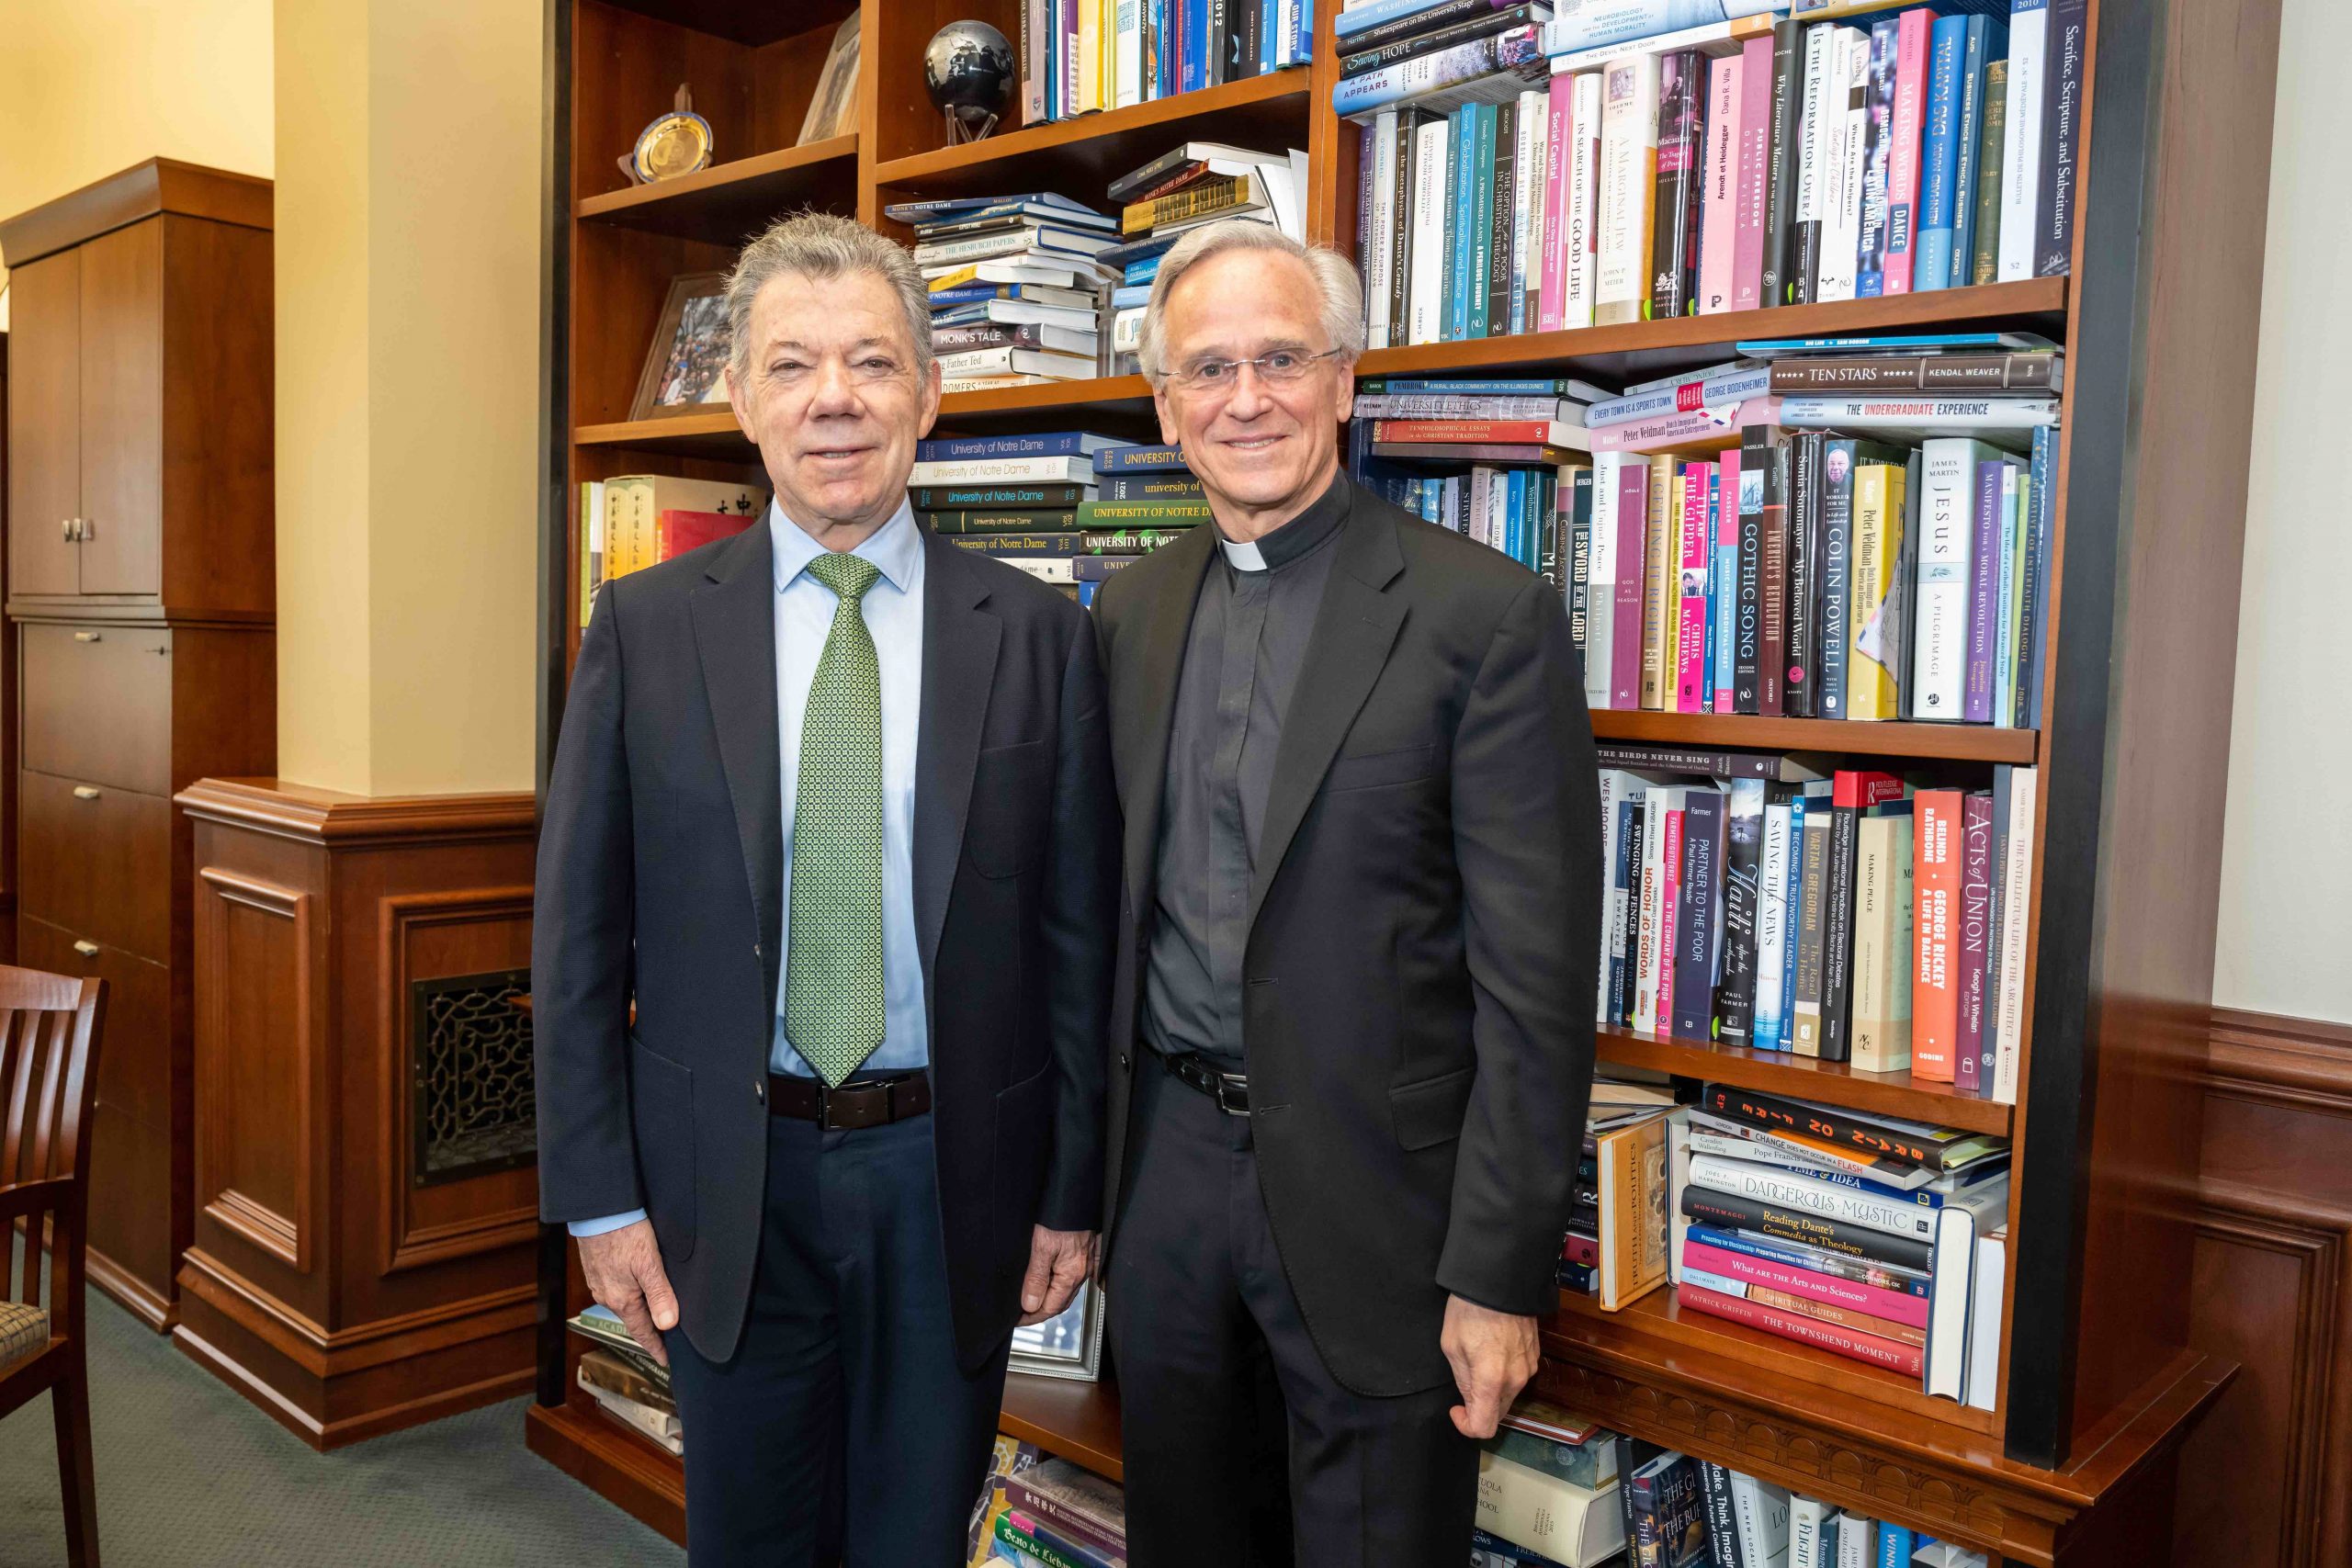 President Juan Manuel Santos standing next to Fr. John Jenkins in front of a bookshelf